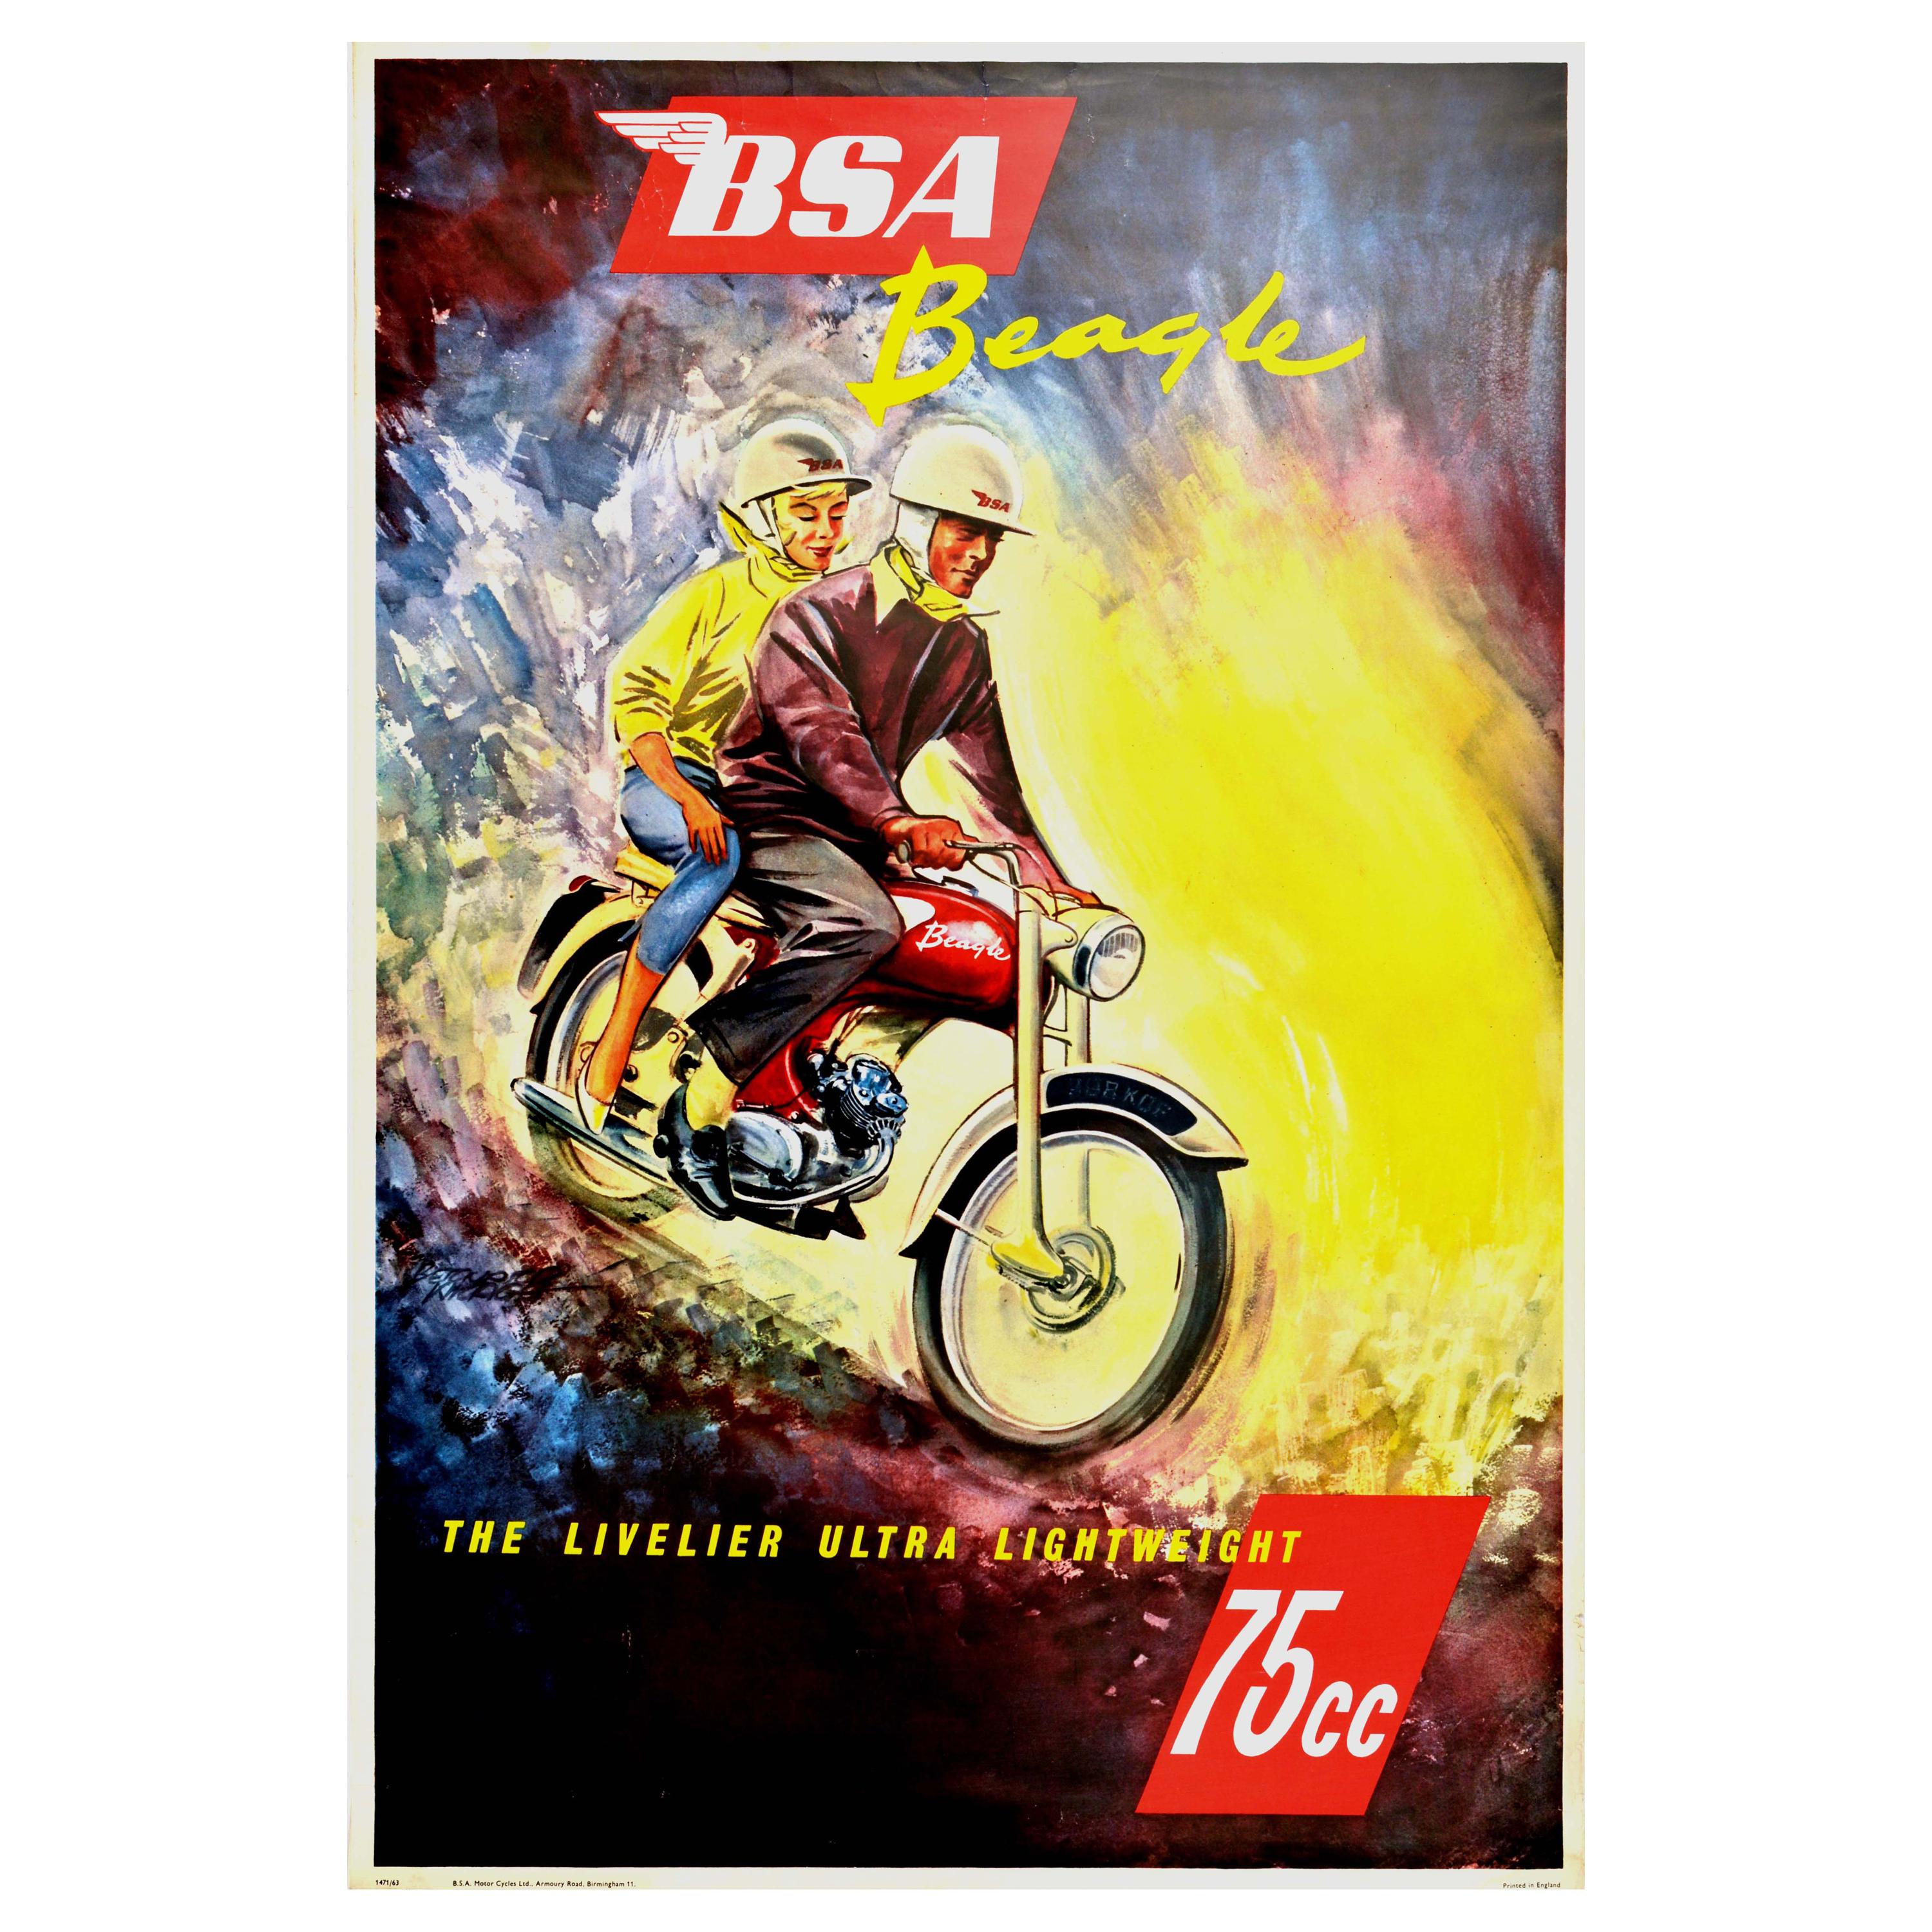 Original Vintage Poster BSA Beagle Motorcycle Art Ultra Lightweight 75cc Engine